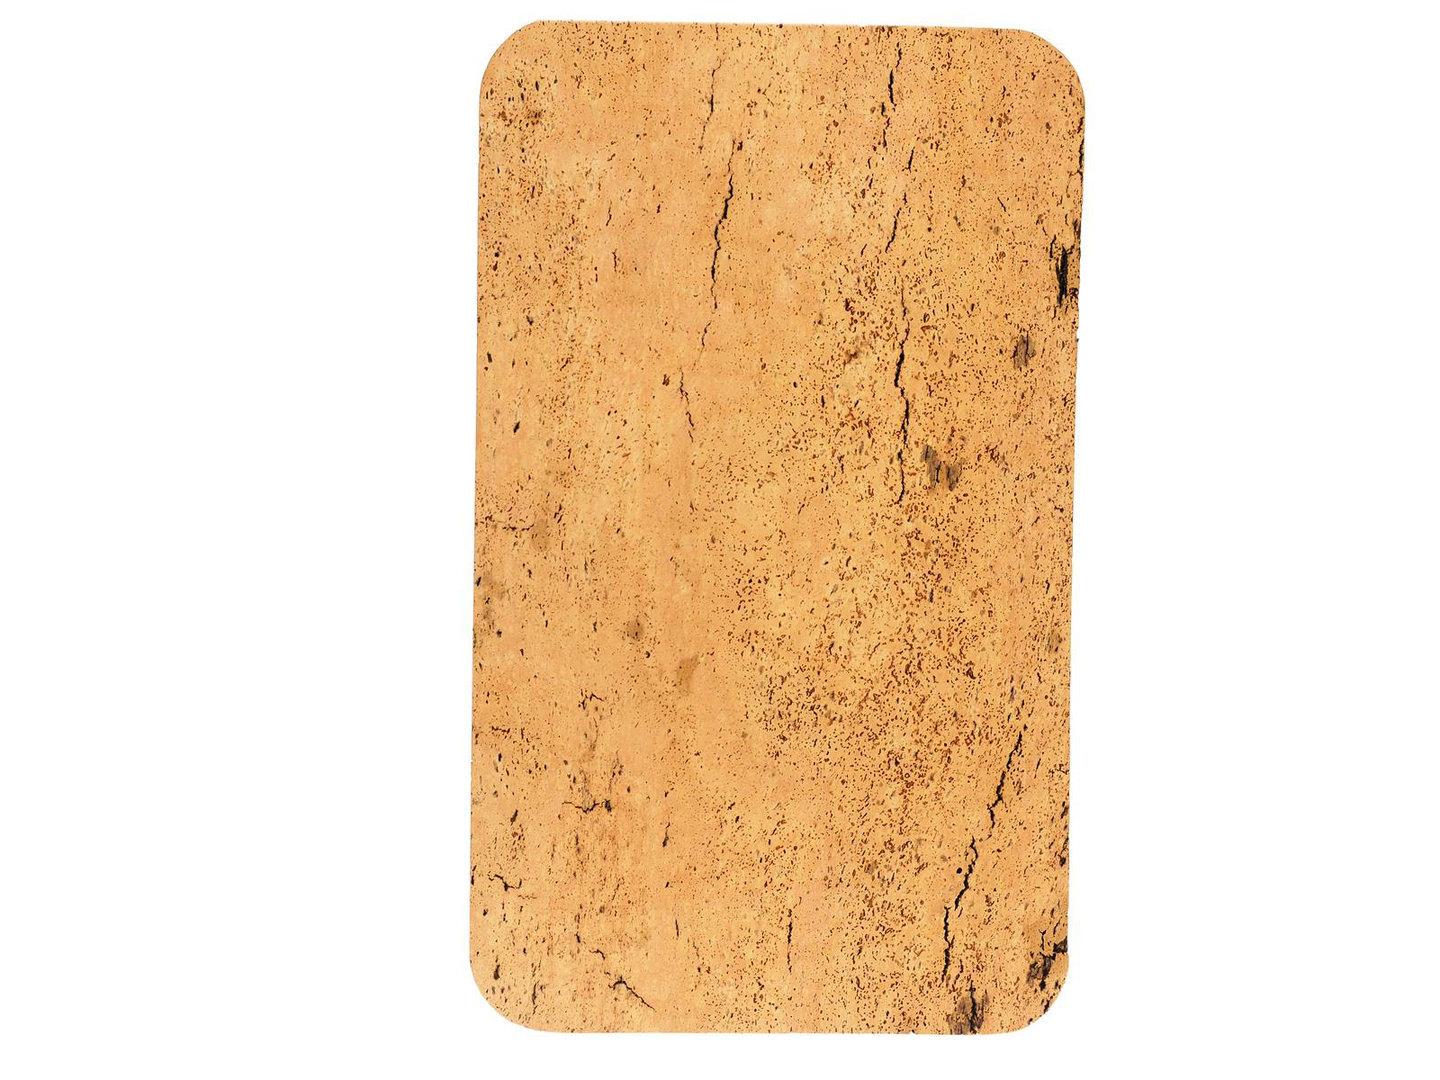 7730 23 1 Natural cork plate 2